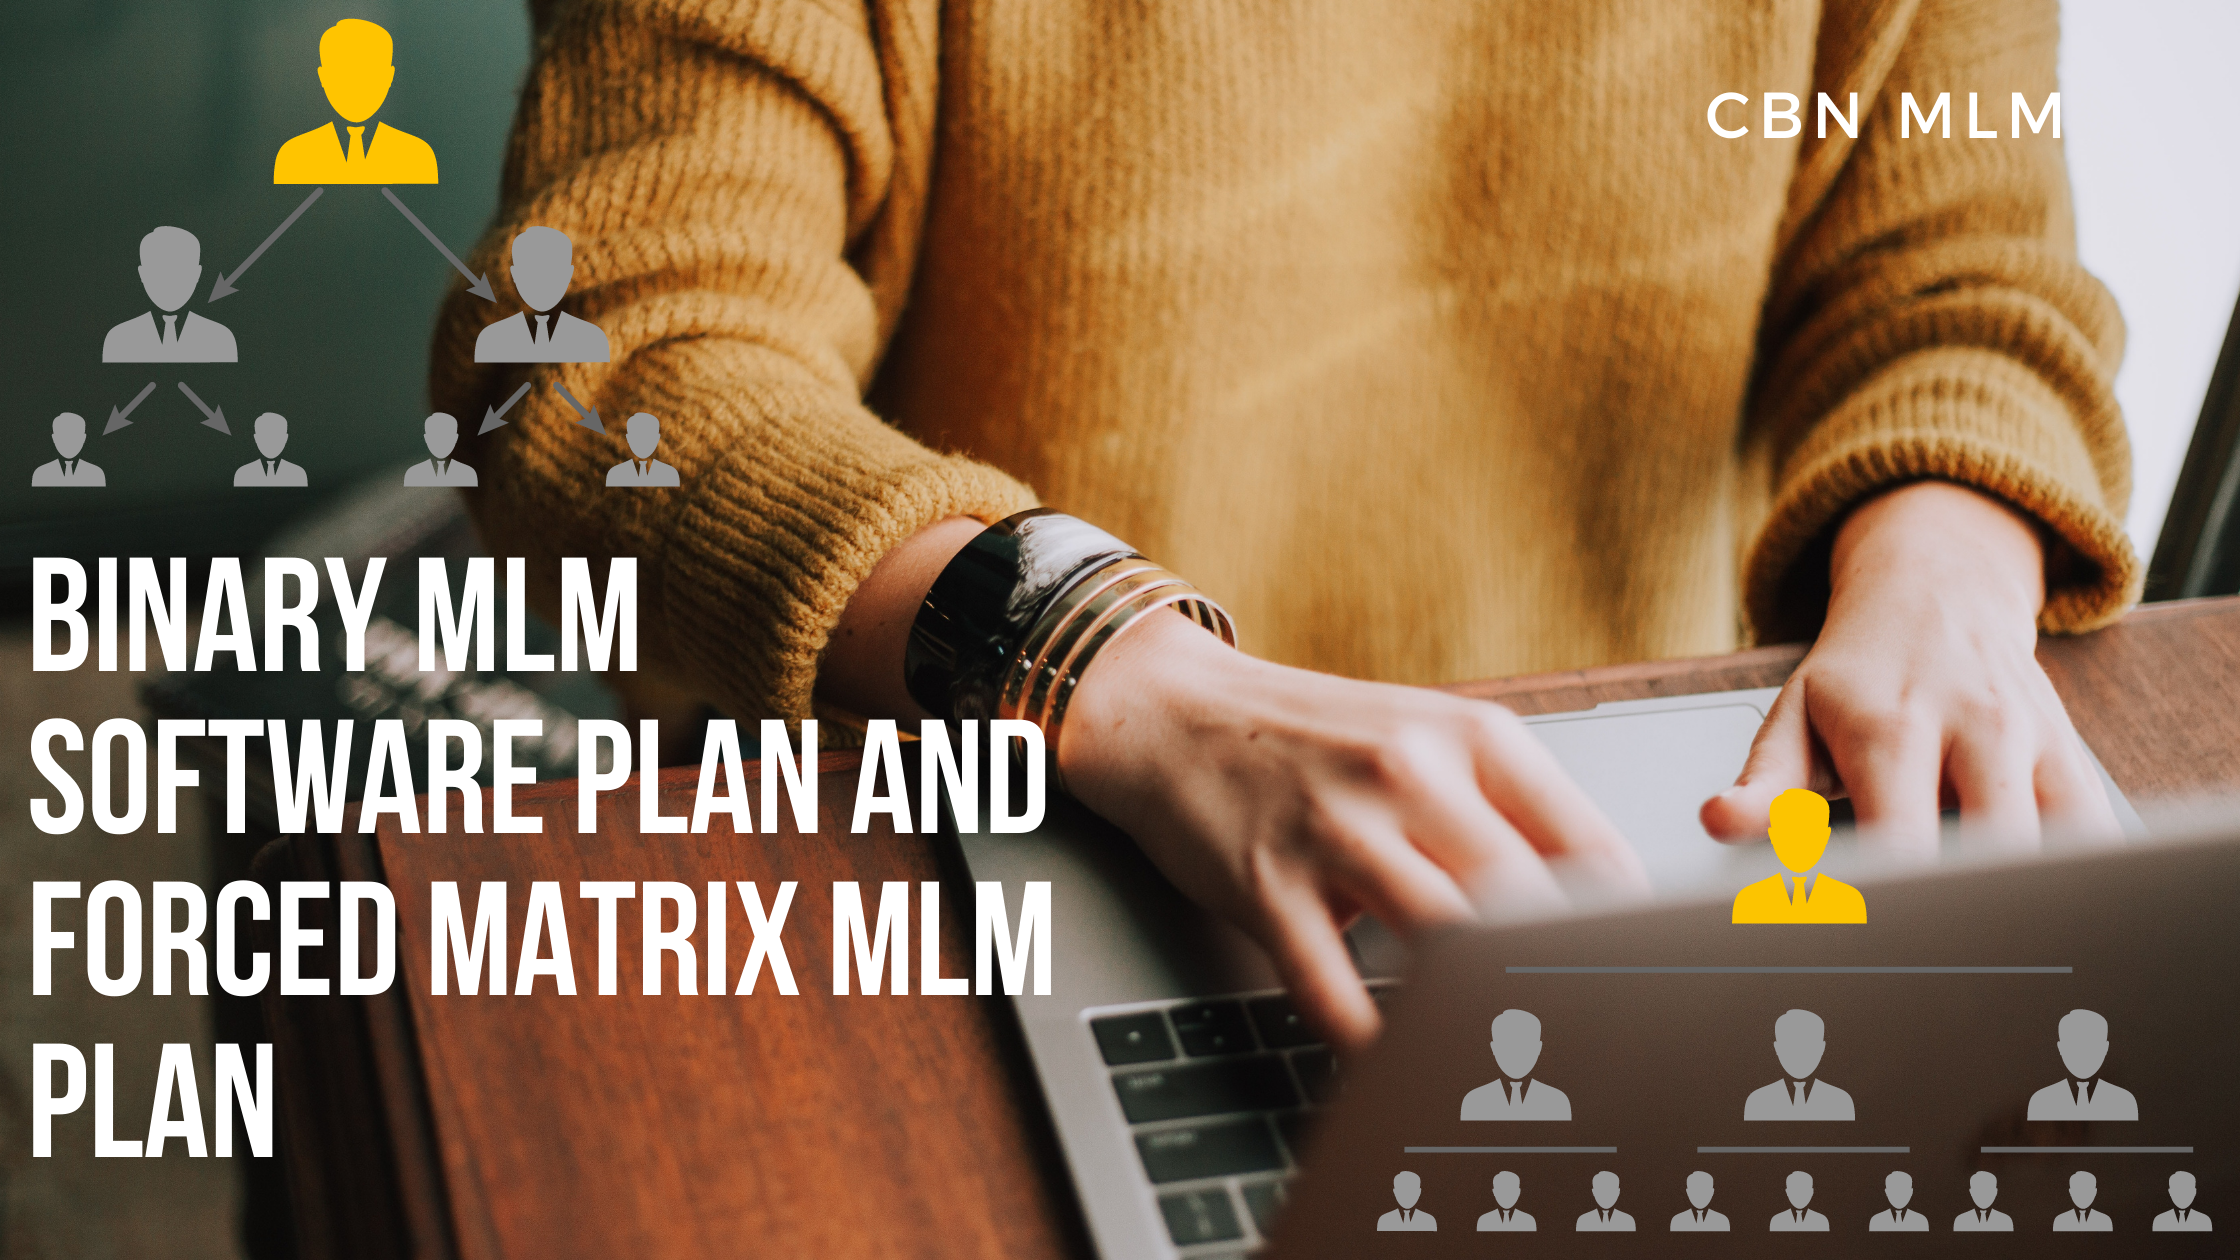 Forced Matrix MLM Plan